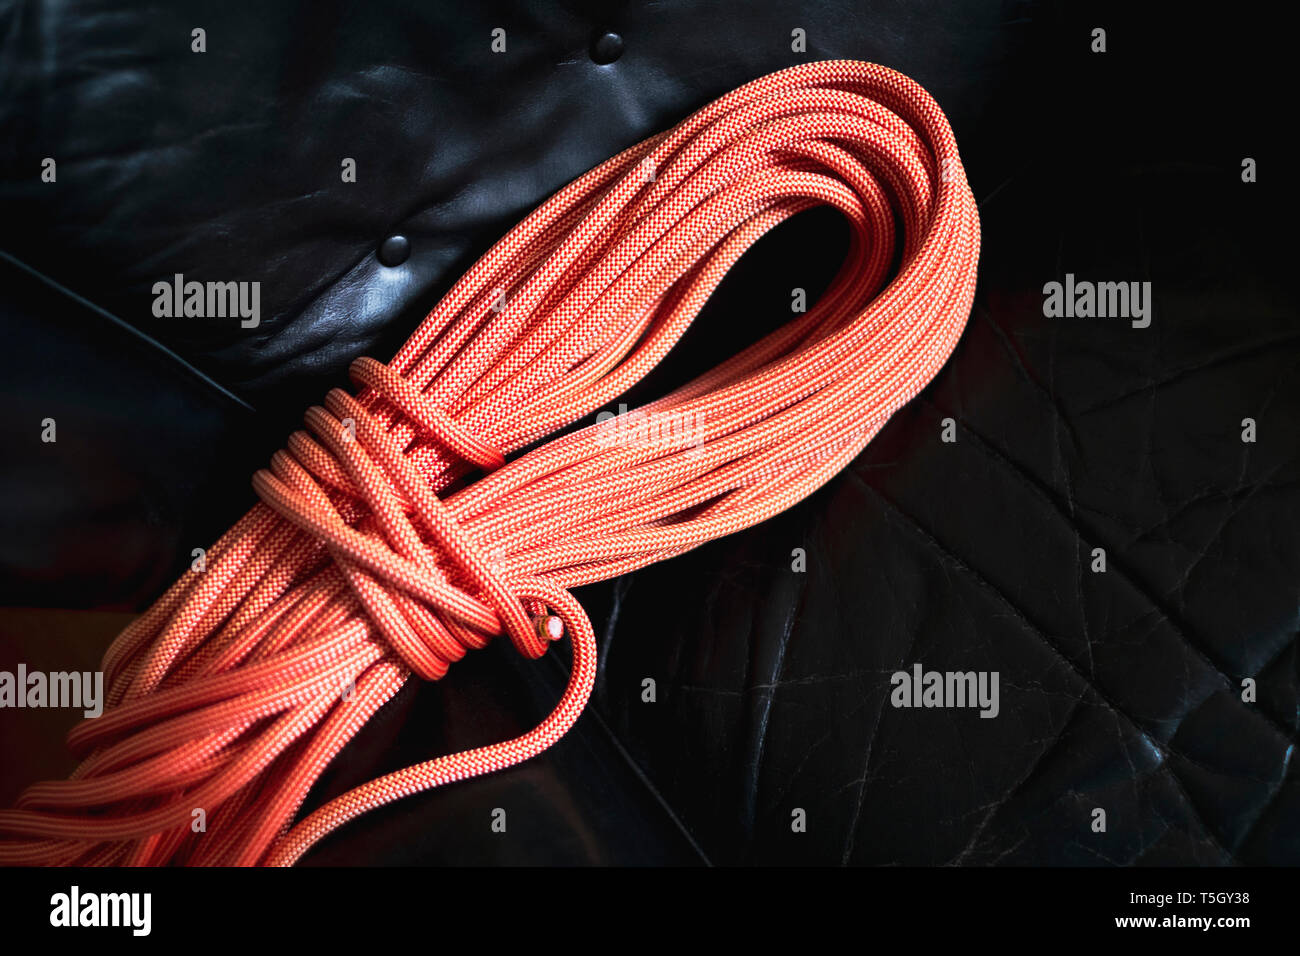 Climbing rope on black leather background Stock Photo